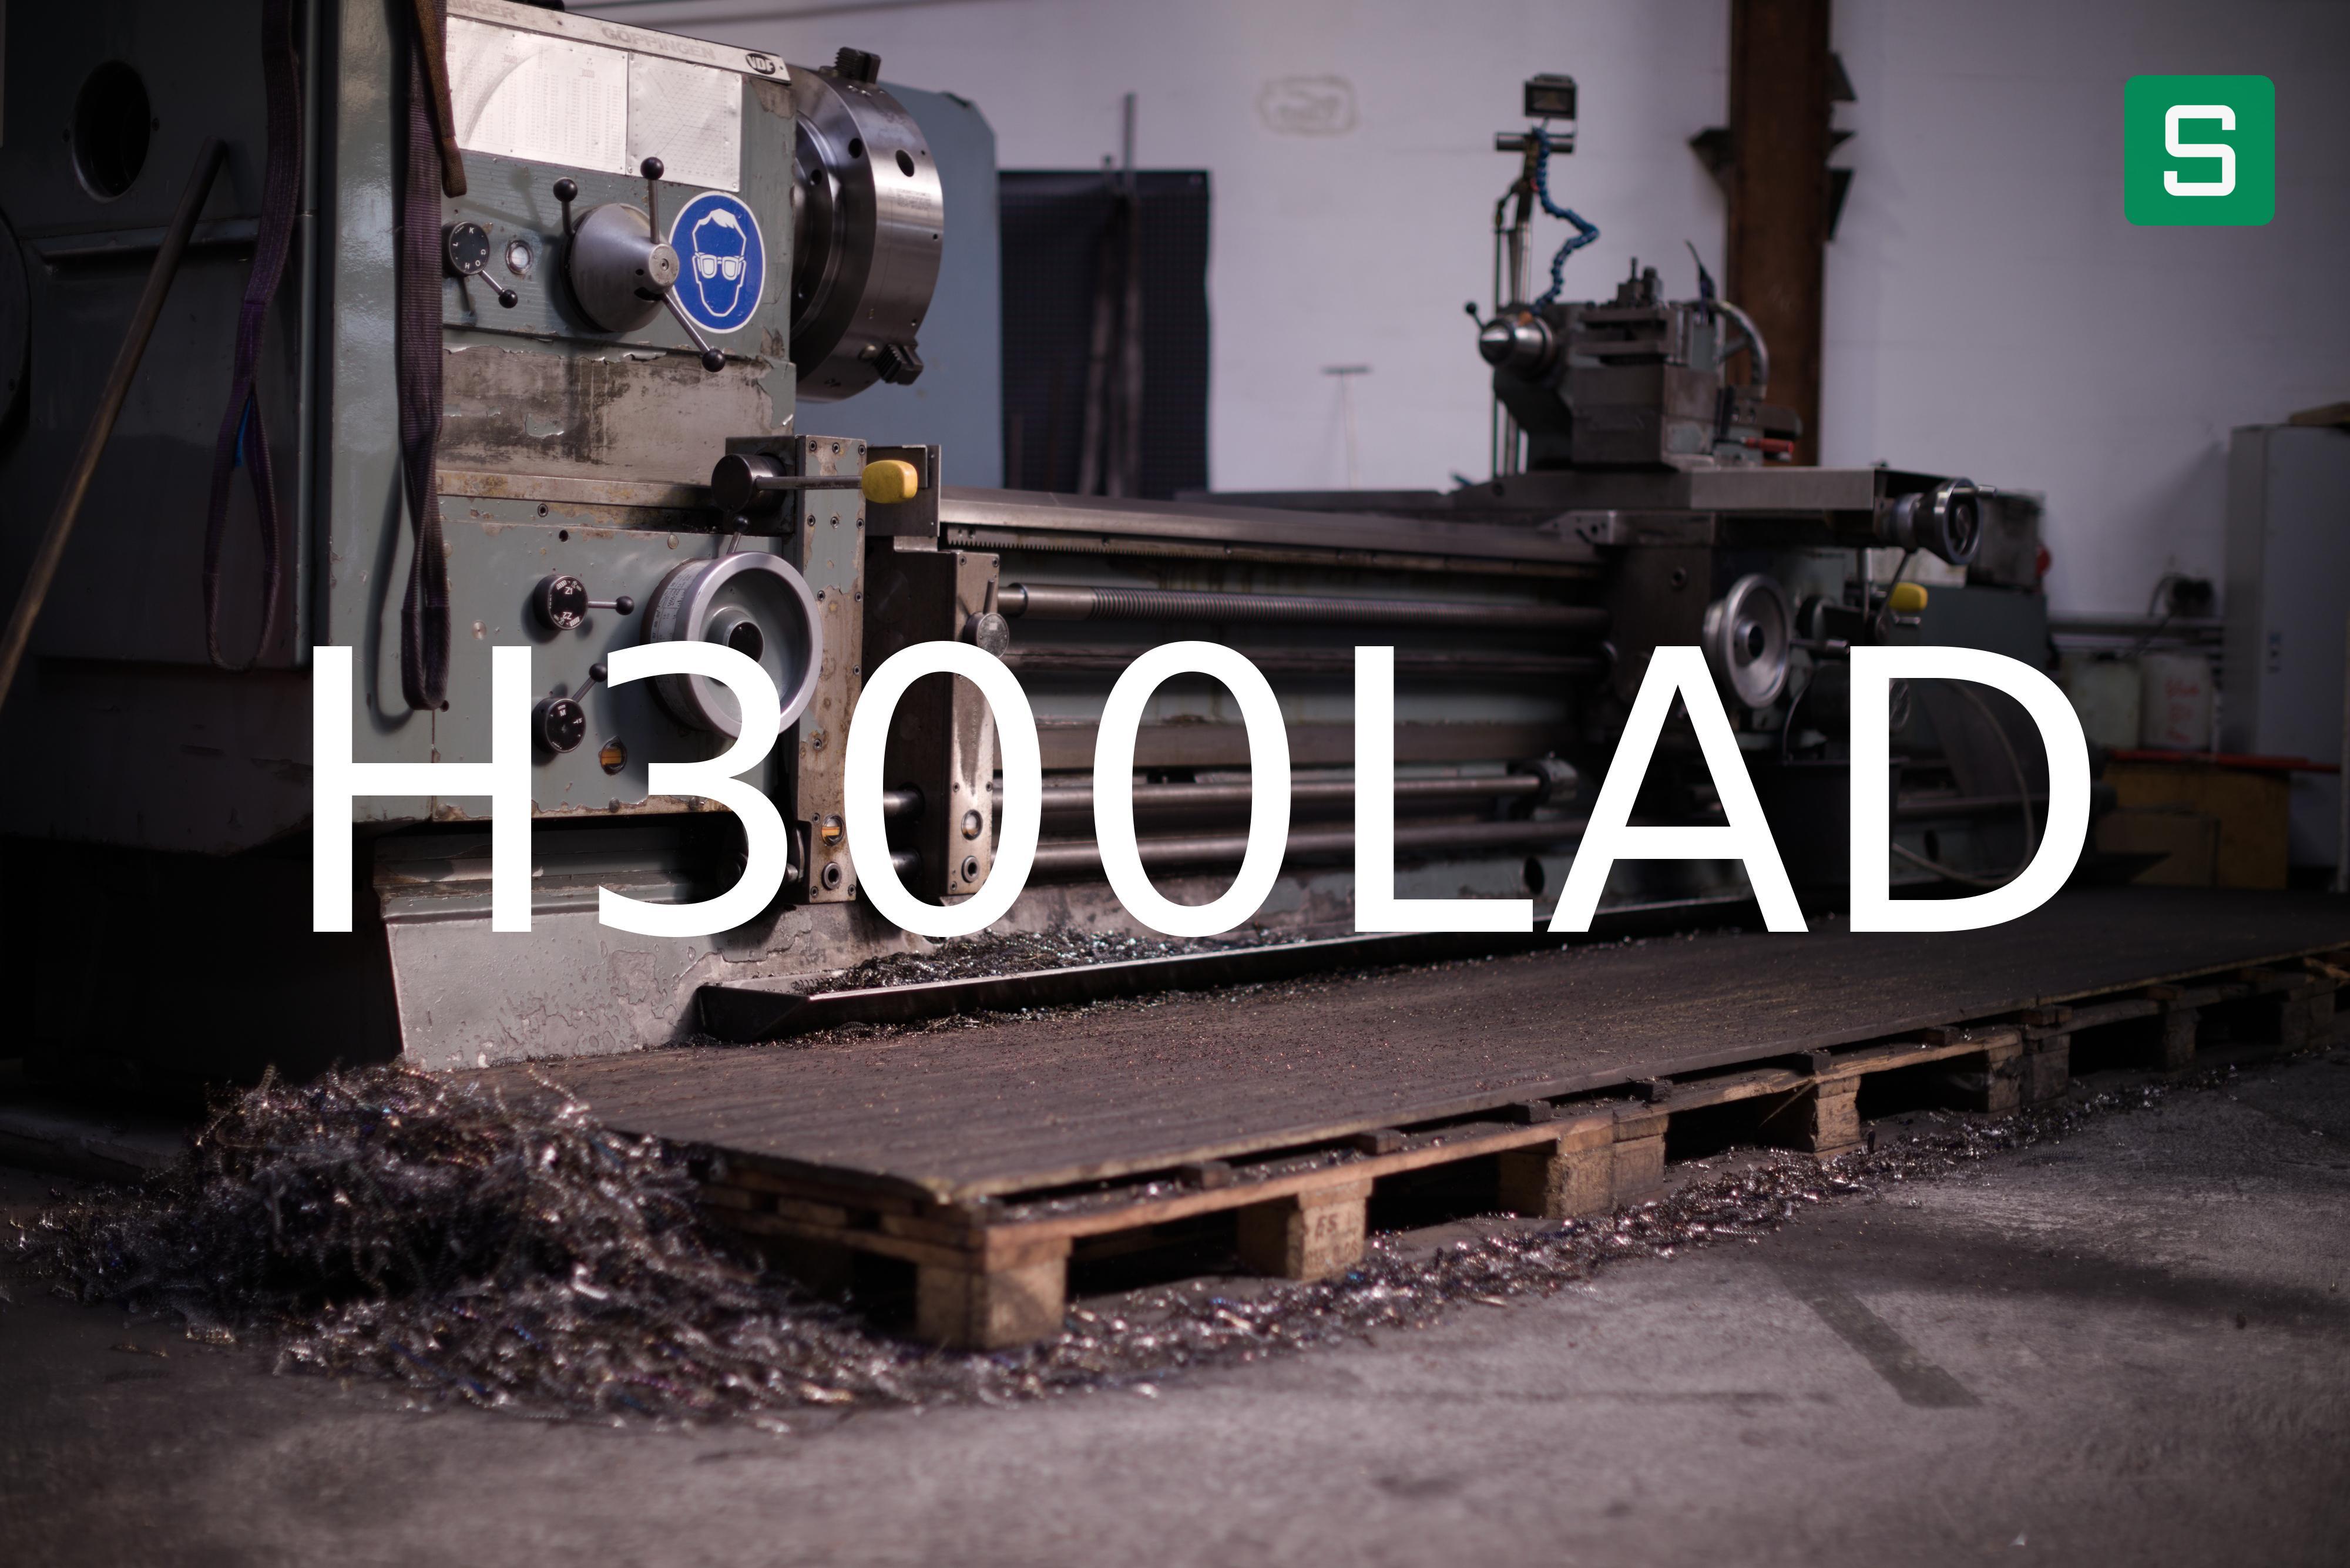 Steel Material: H300LAD